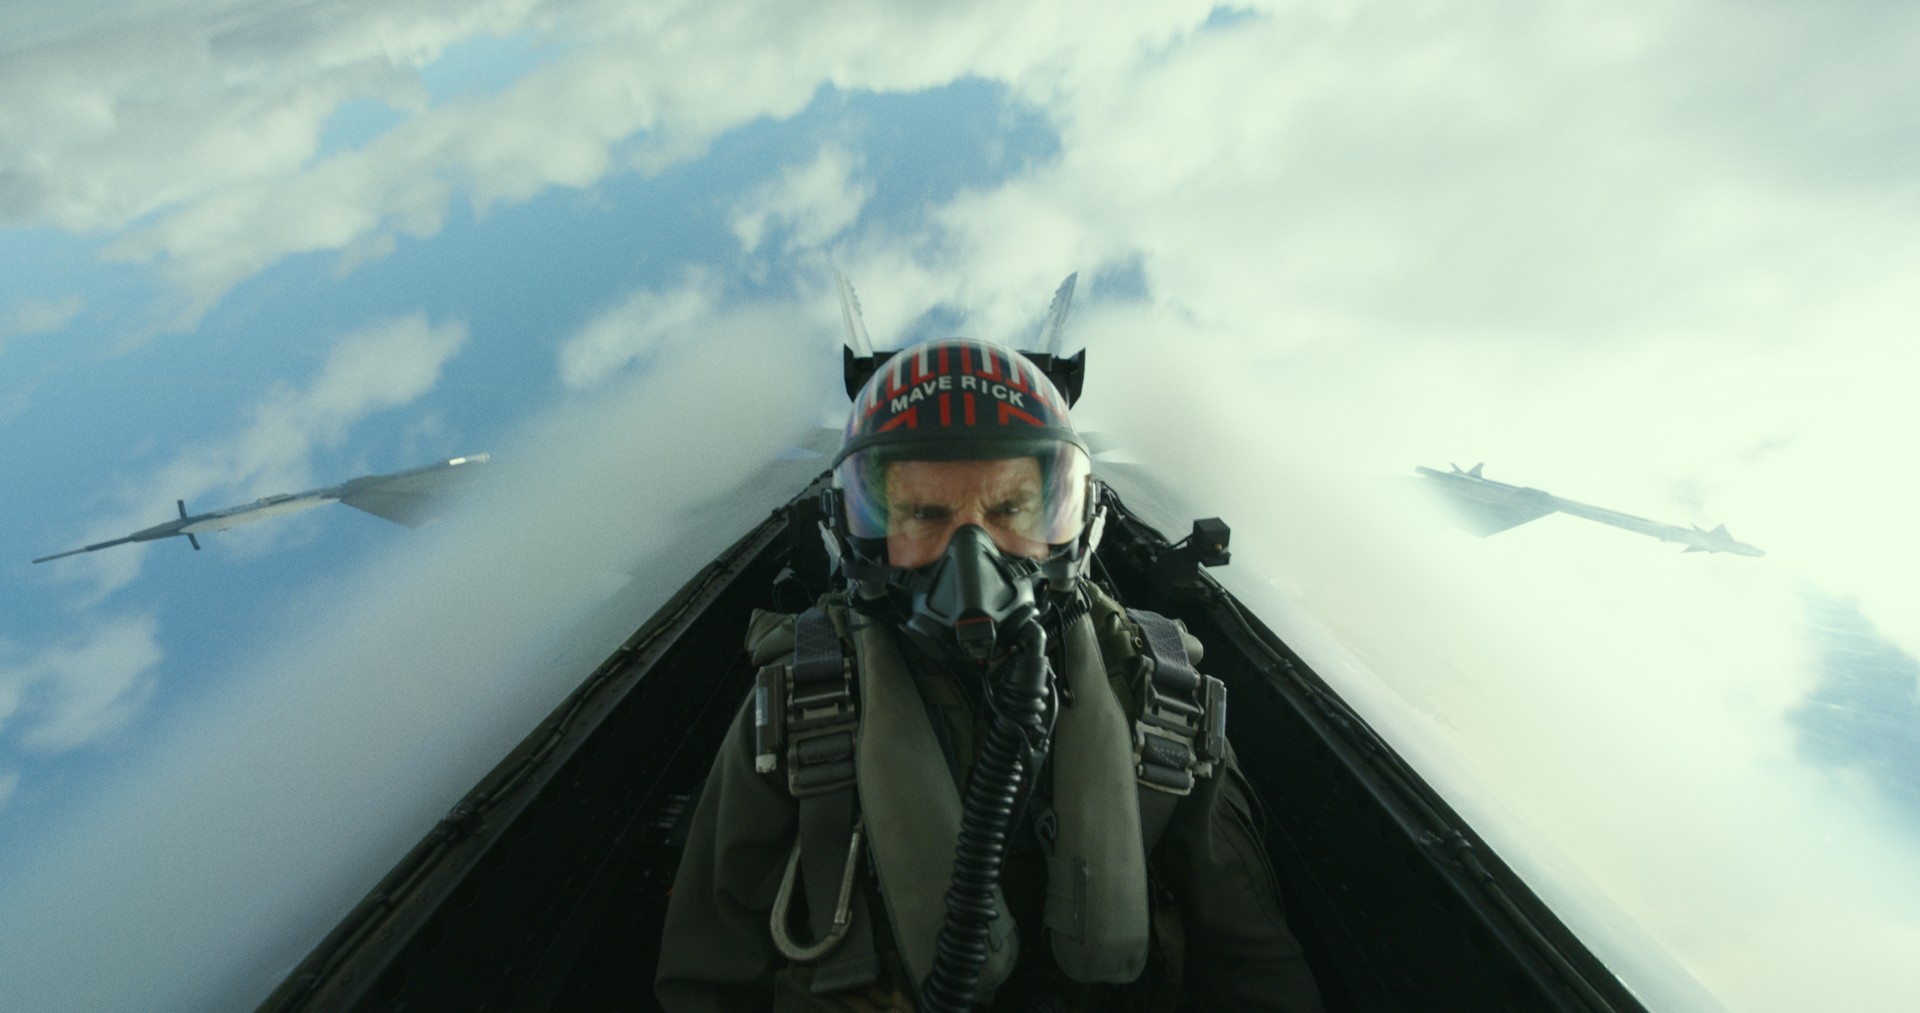 Tom Cruise pilots a jet.